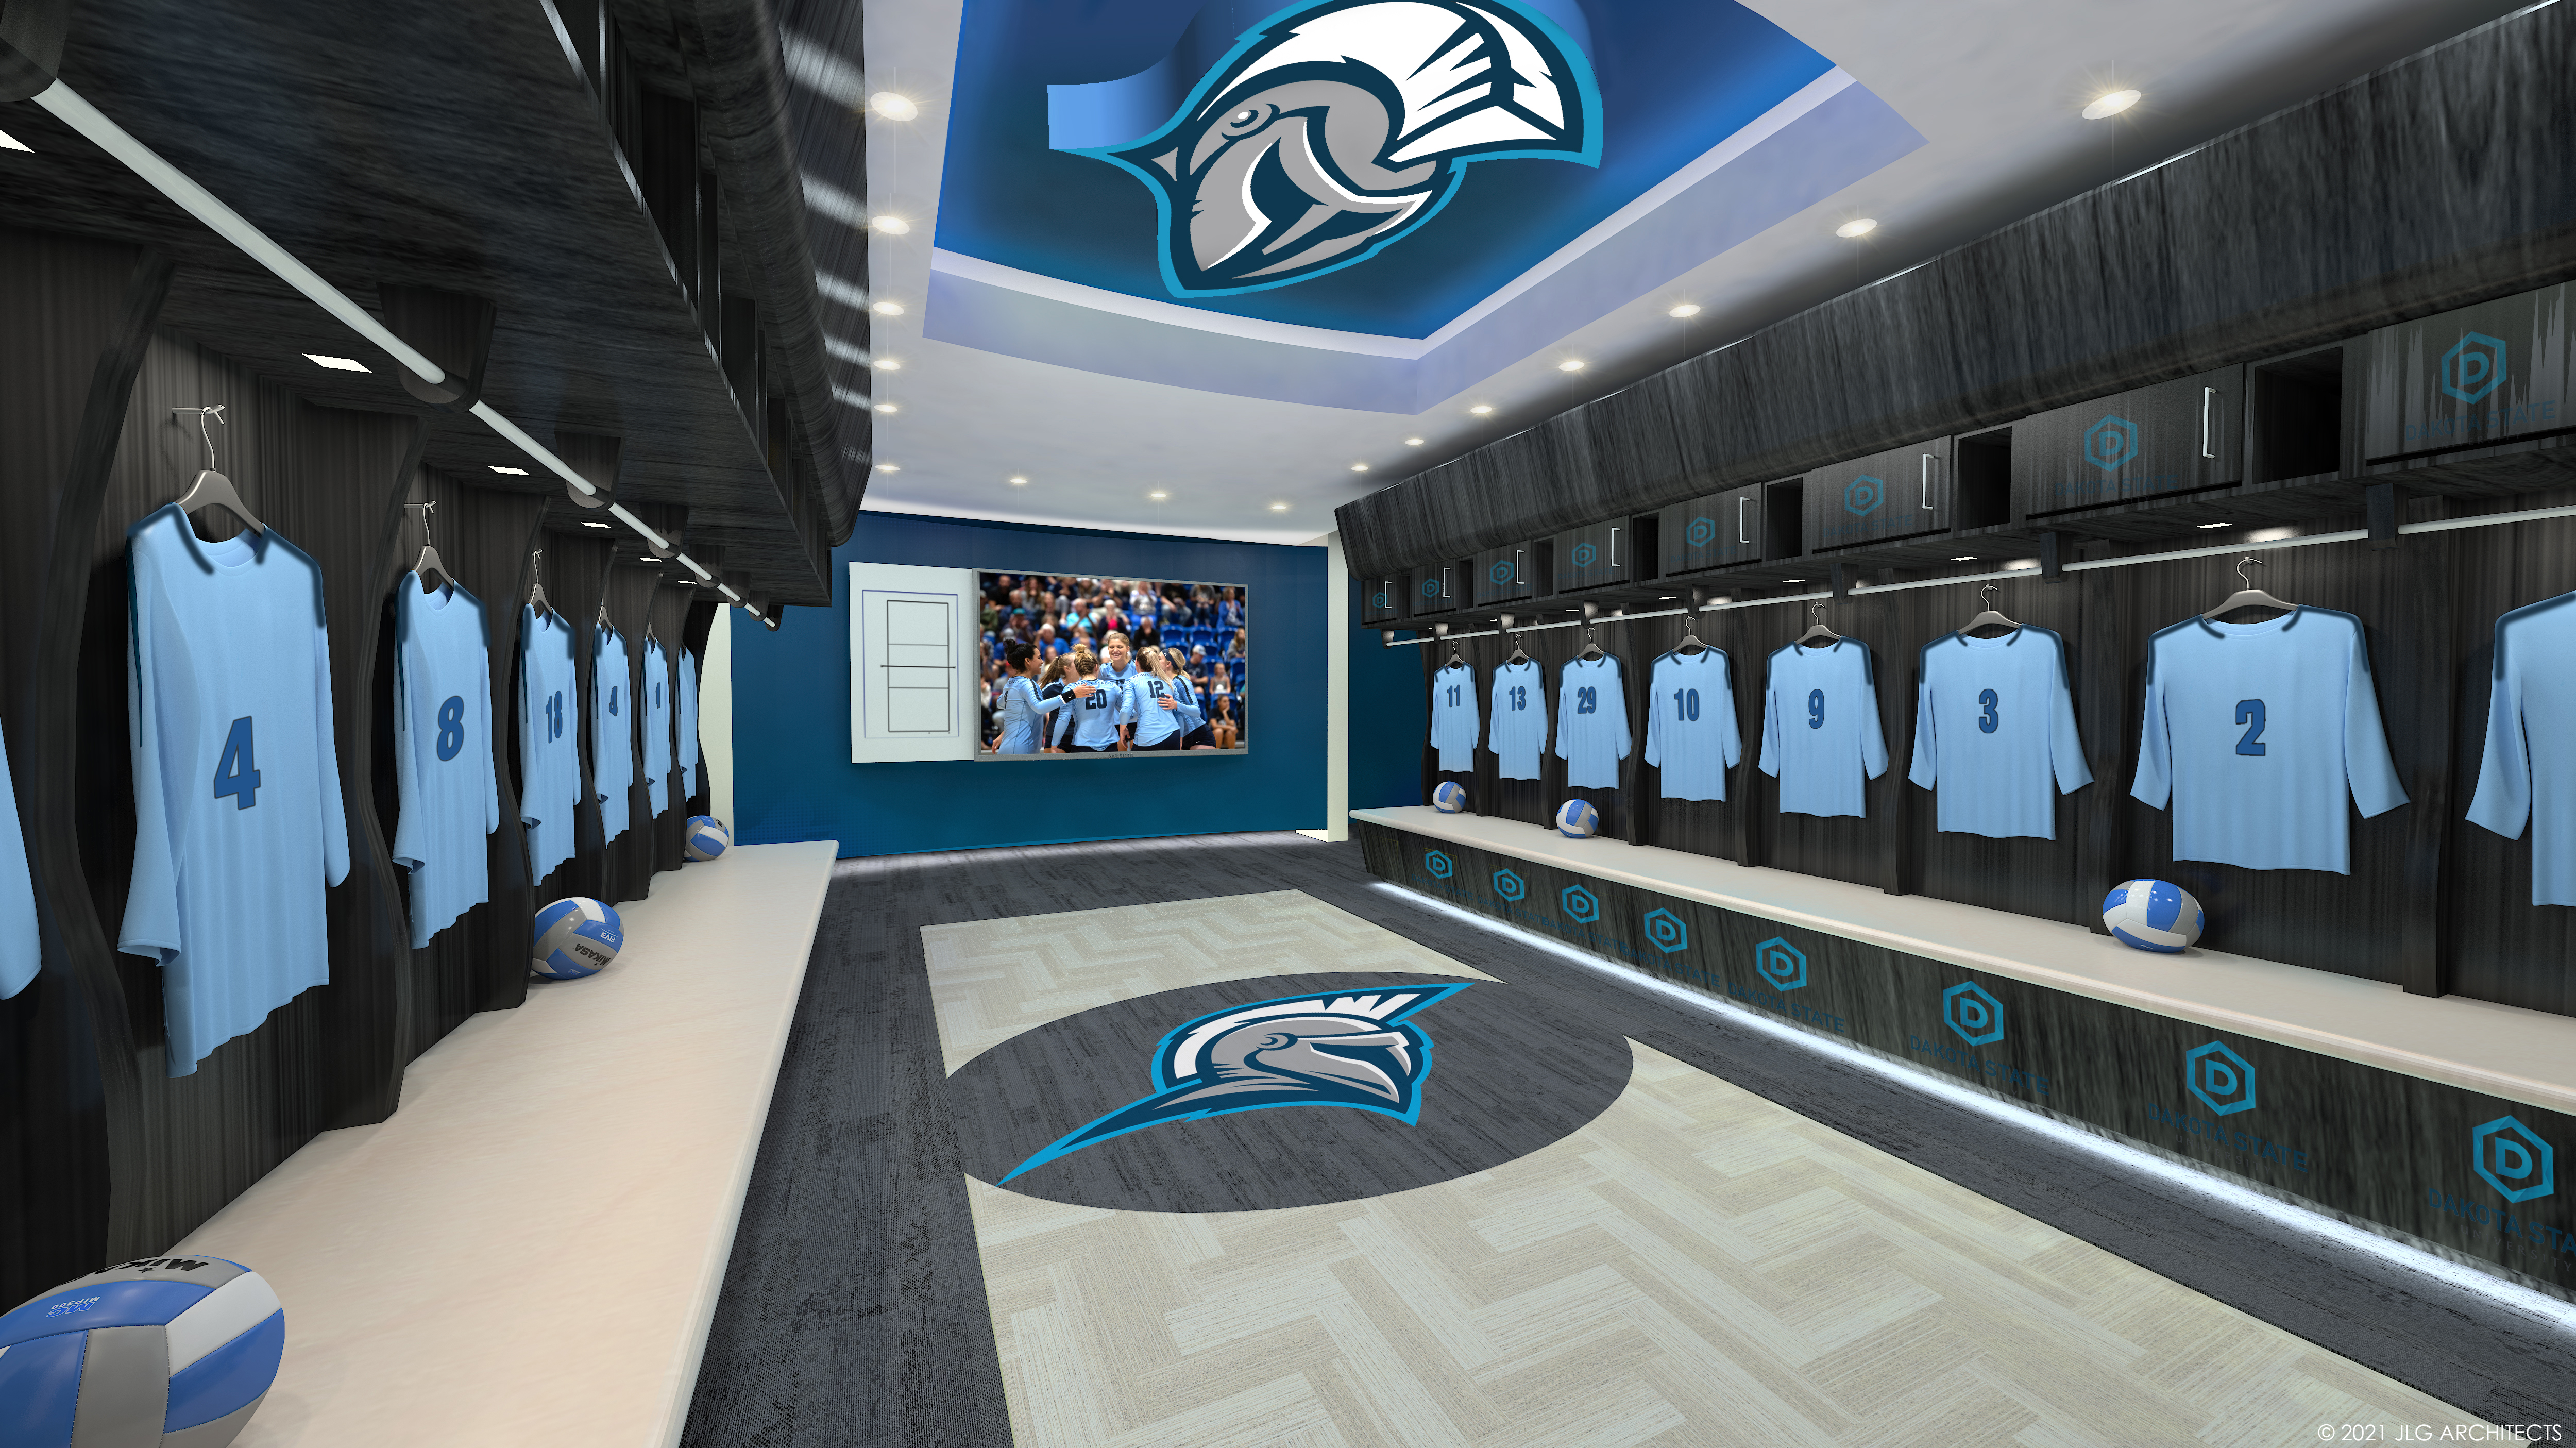 Blankely Field locker rooms